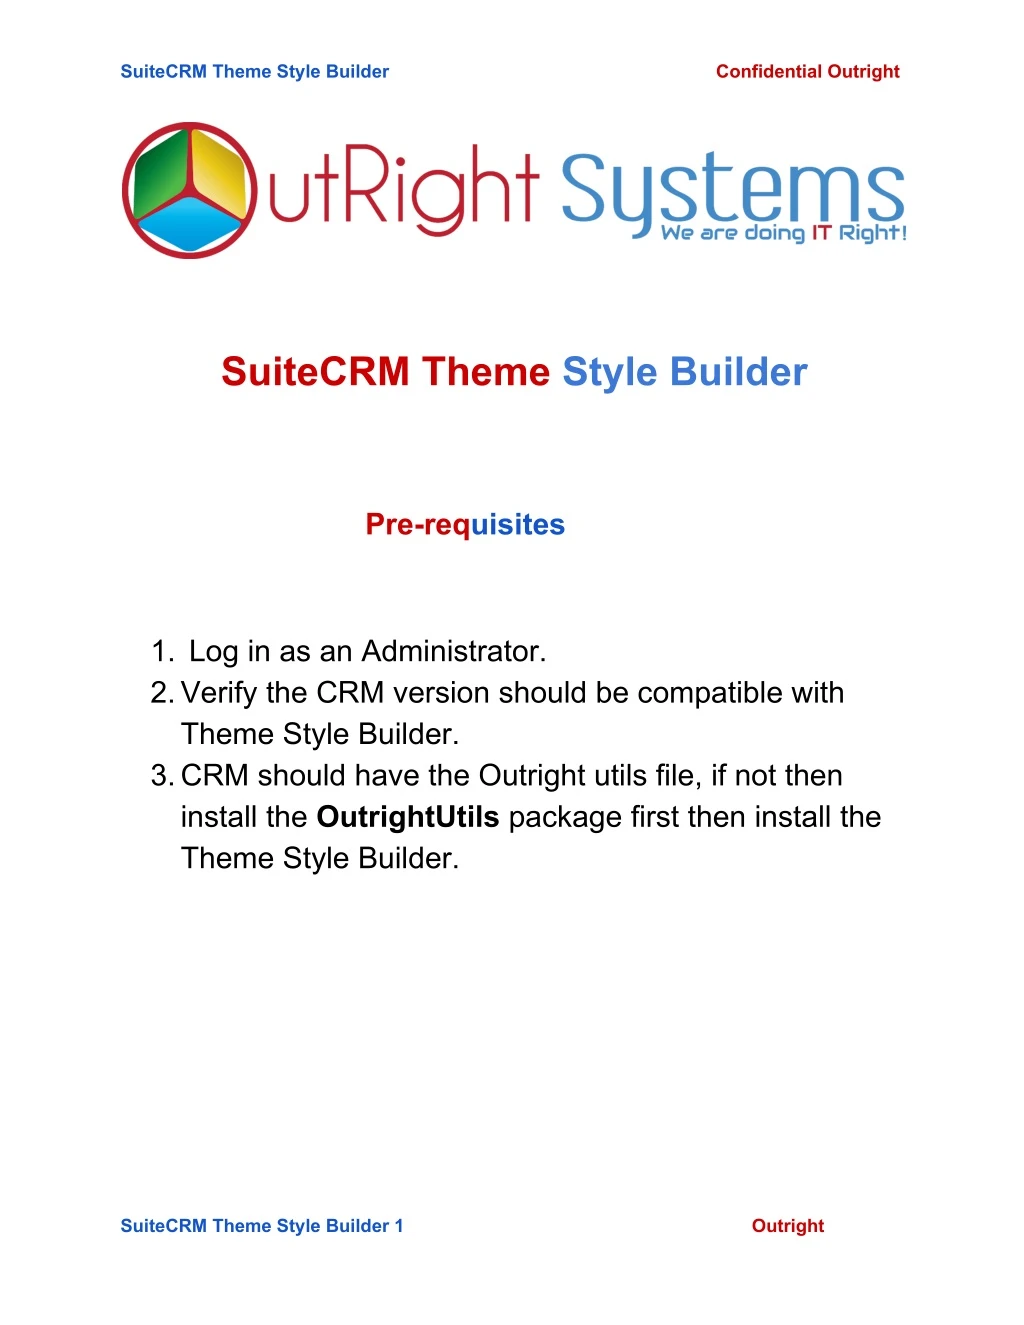 suitecrm theme style builder confidential outright